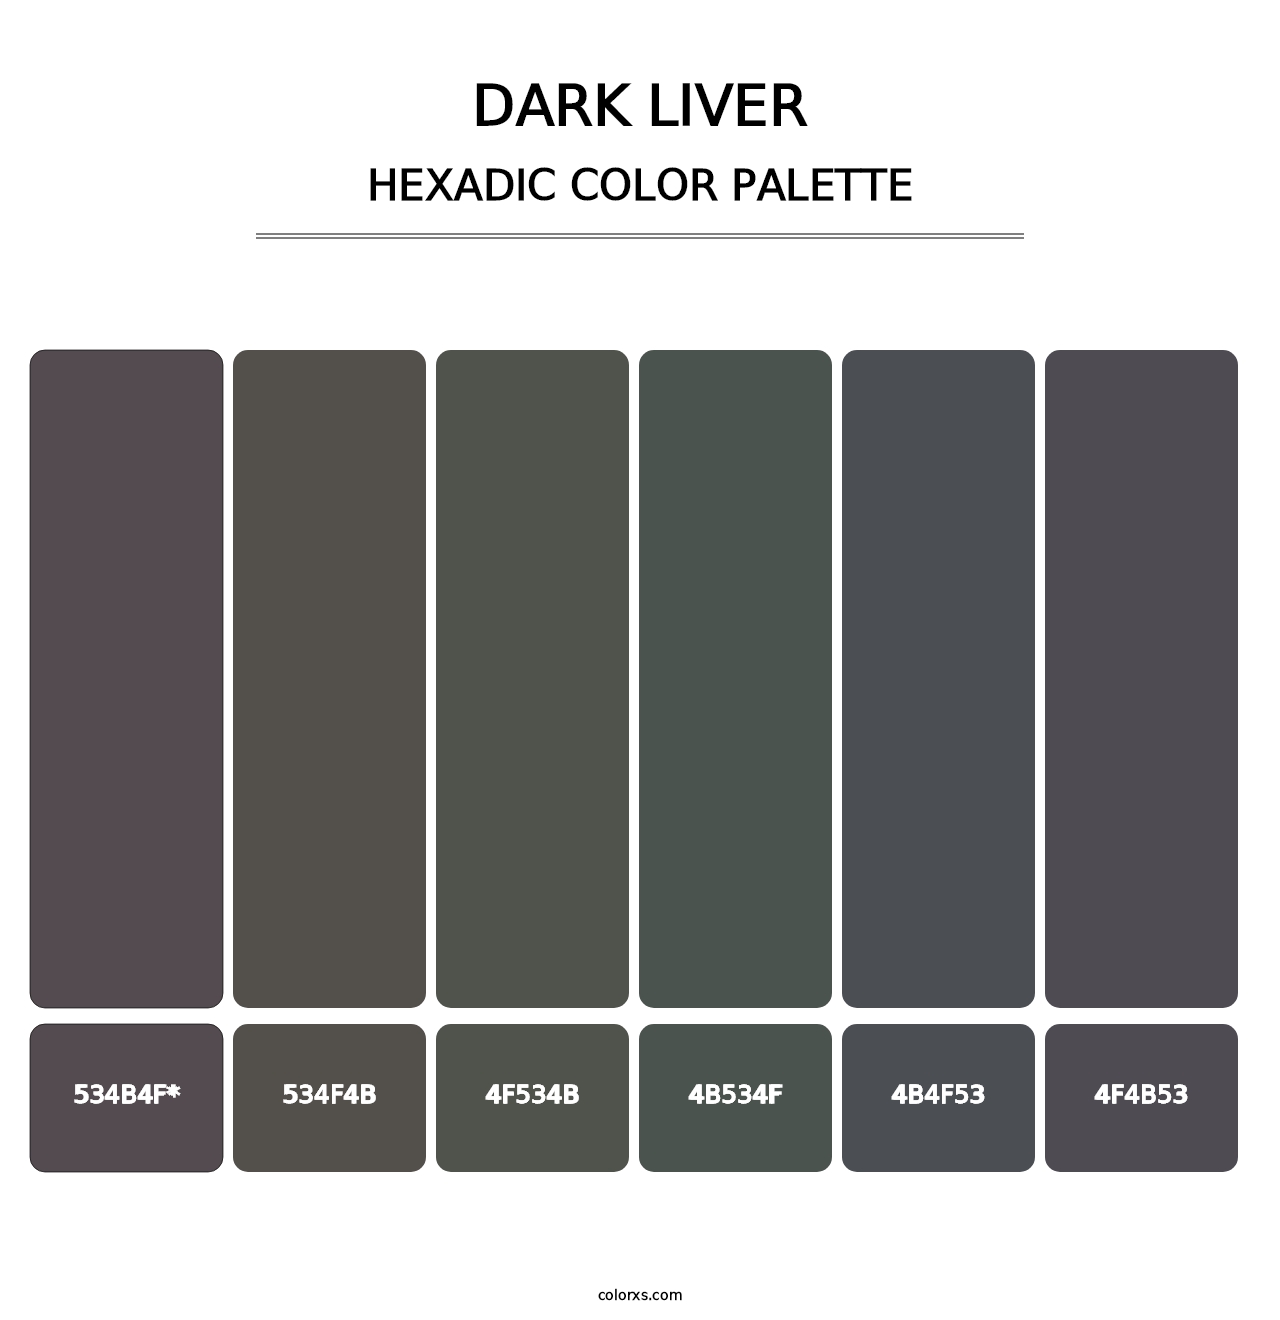 Dark Liver - Hexadic Color Palette